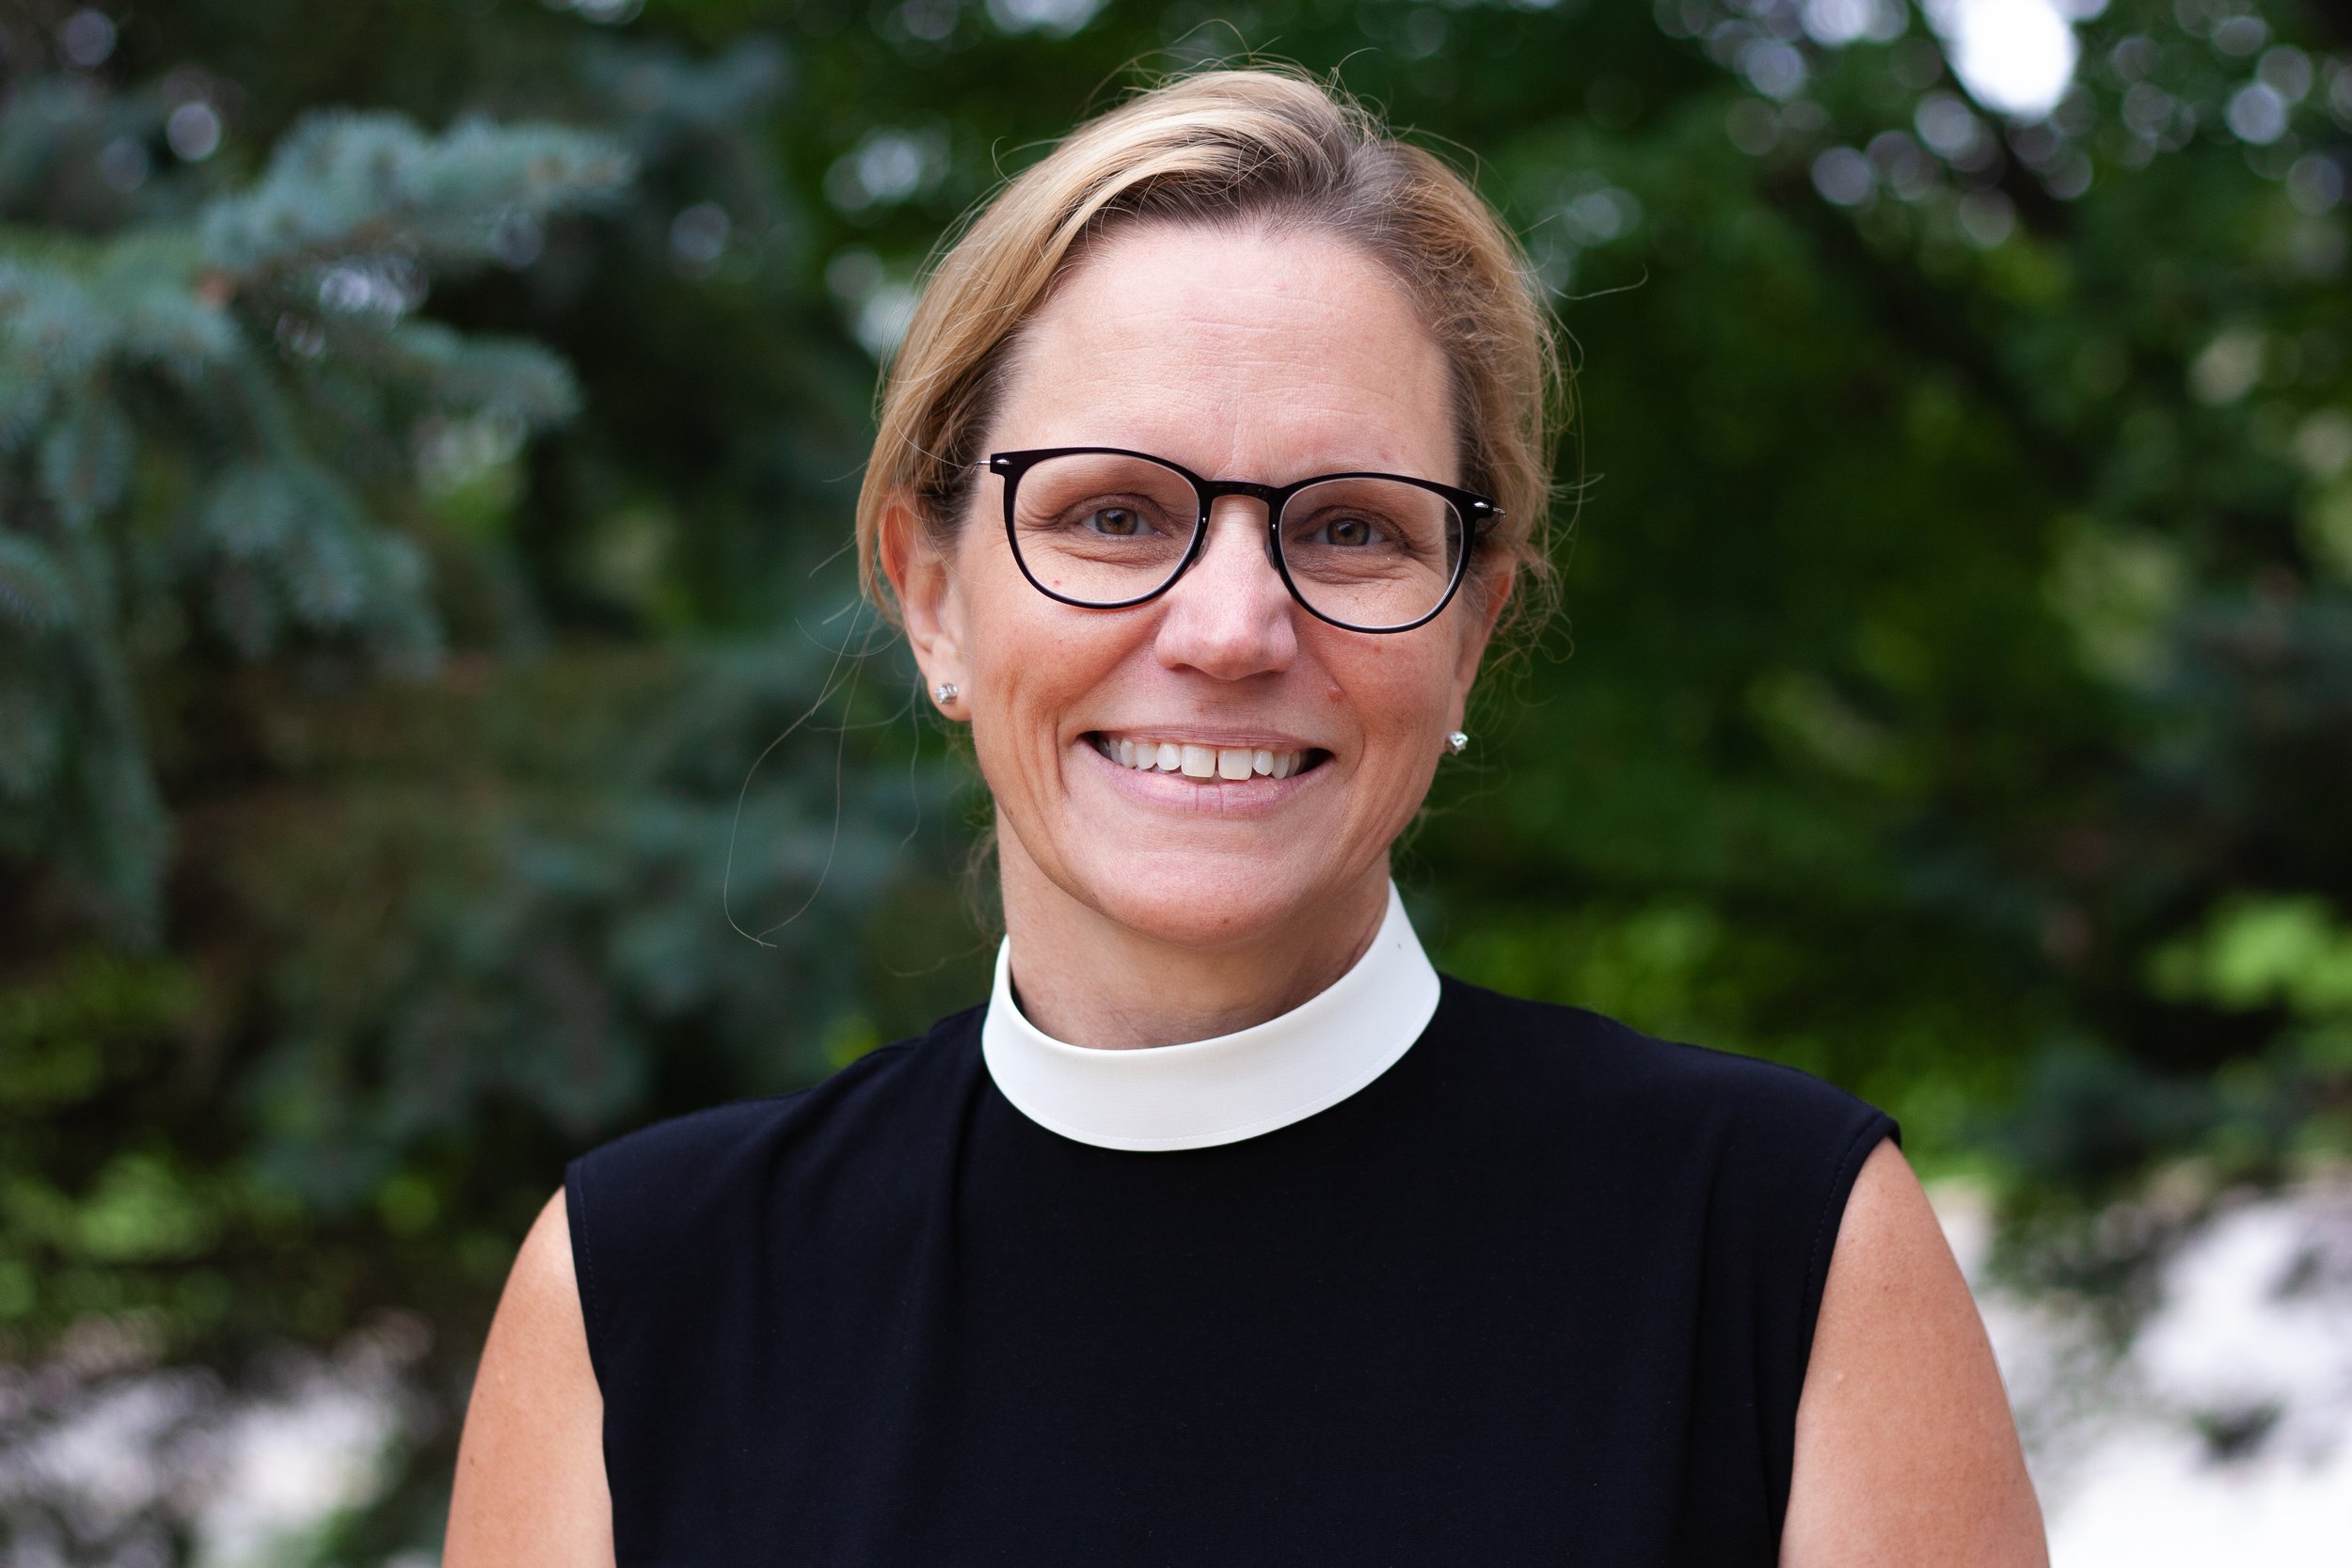 Rev. Sarah J. Stumme, Senior Pastor